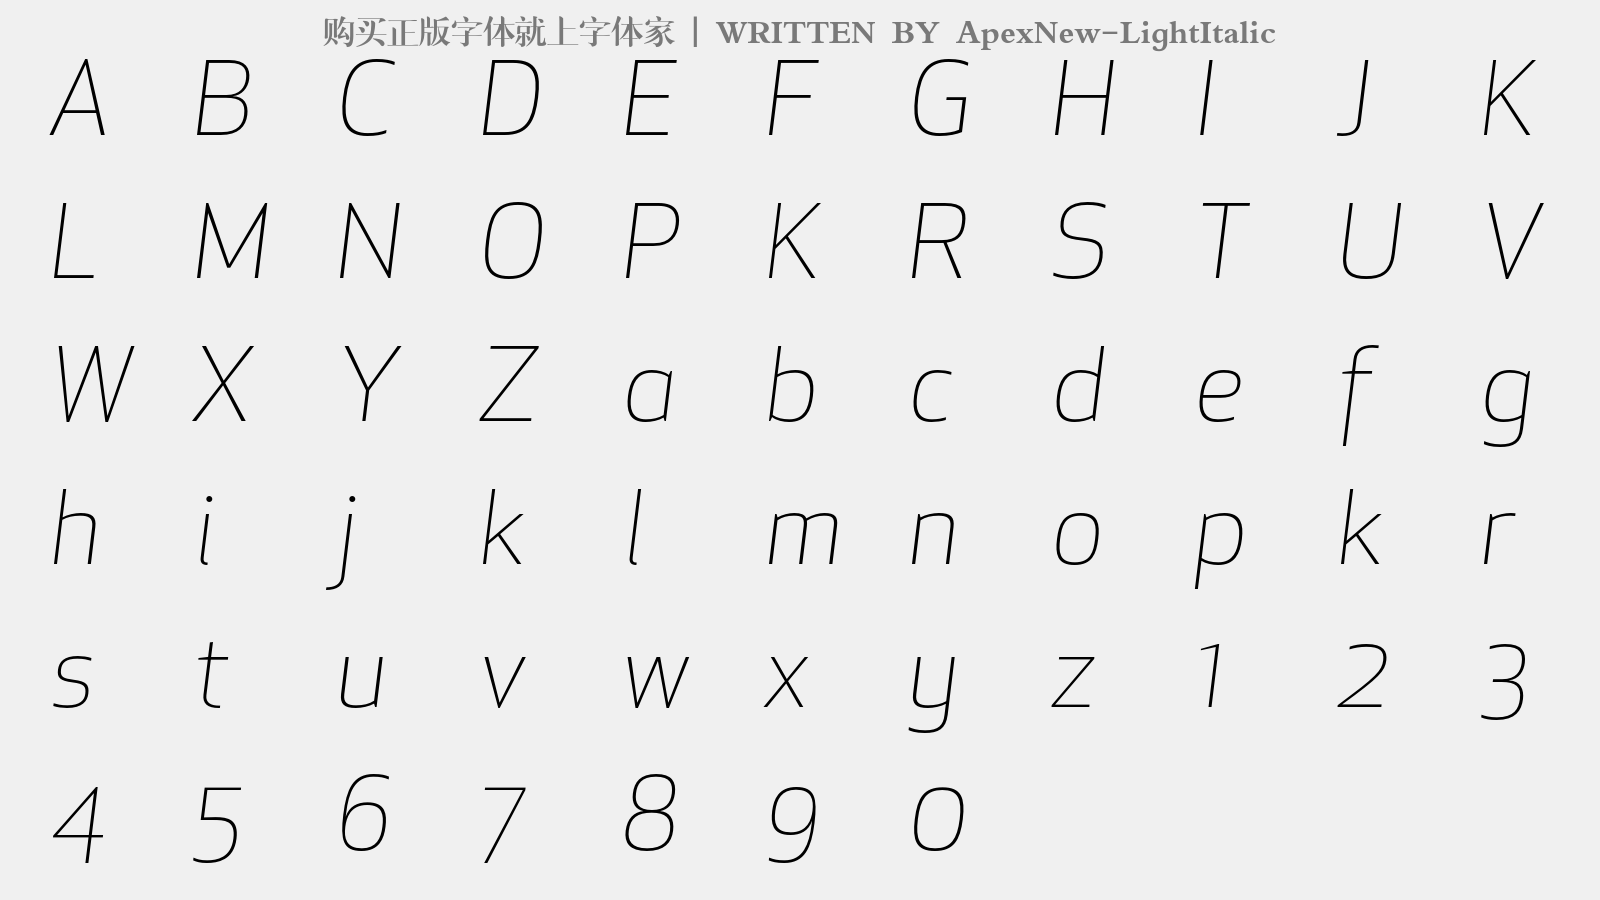 ApexNew-LightItalic - 大写字母/小写字母/数字